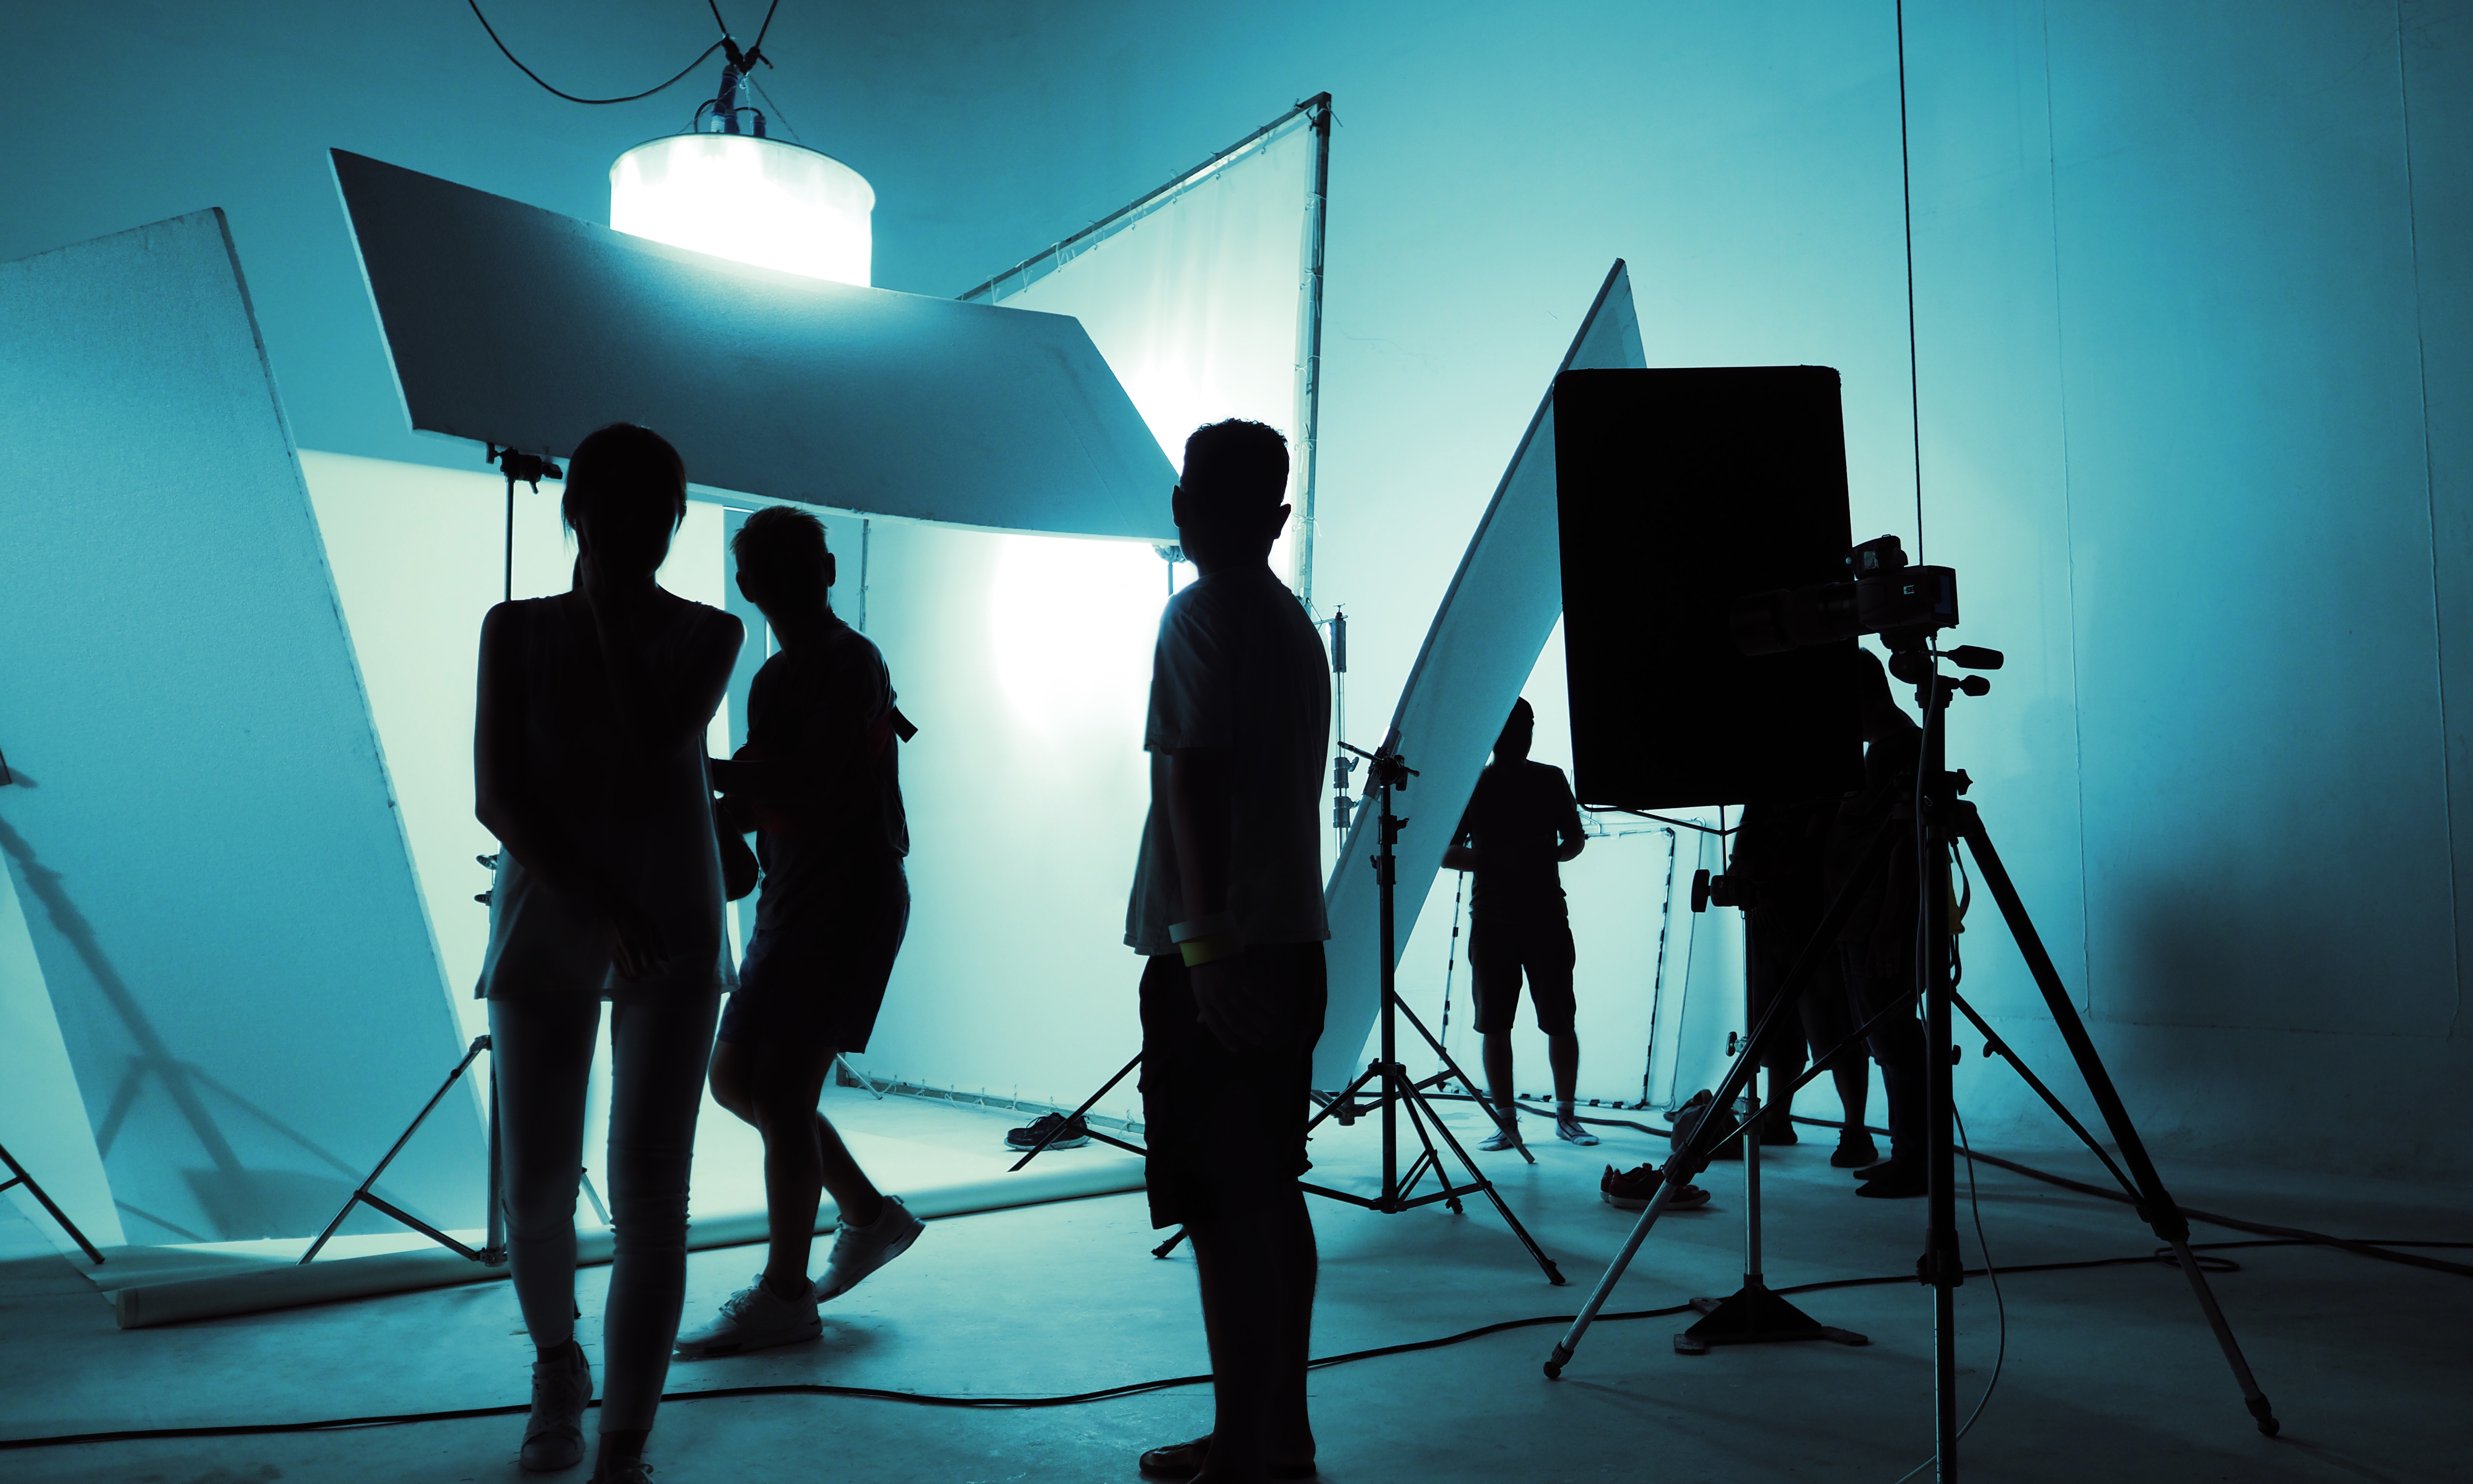 Shooting studio for photographer and creative art director